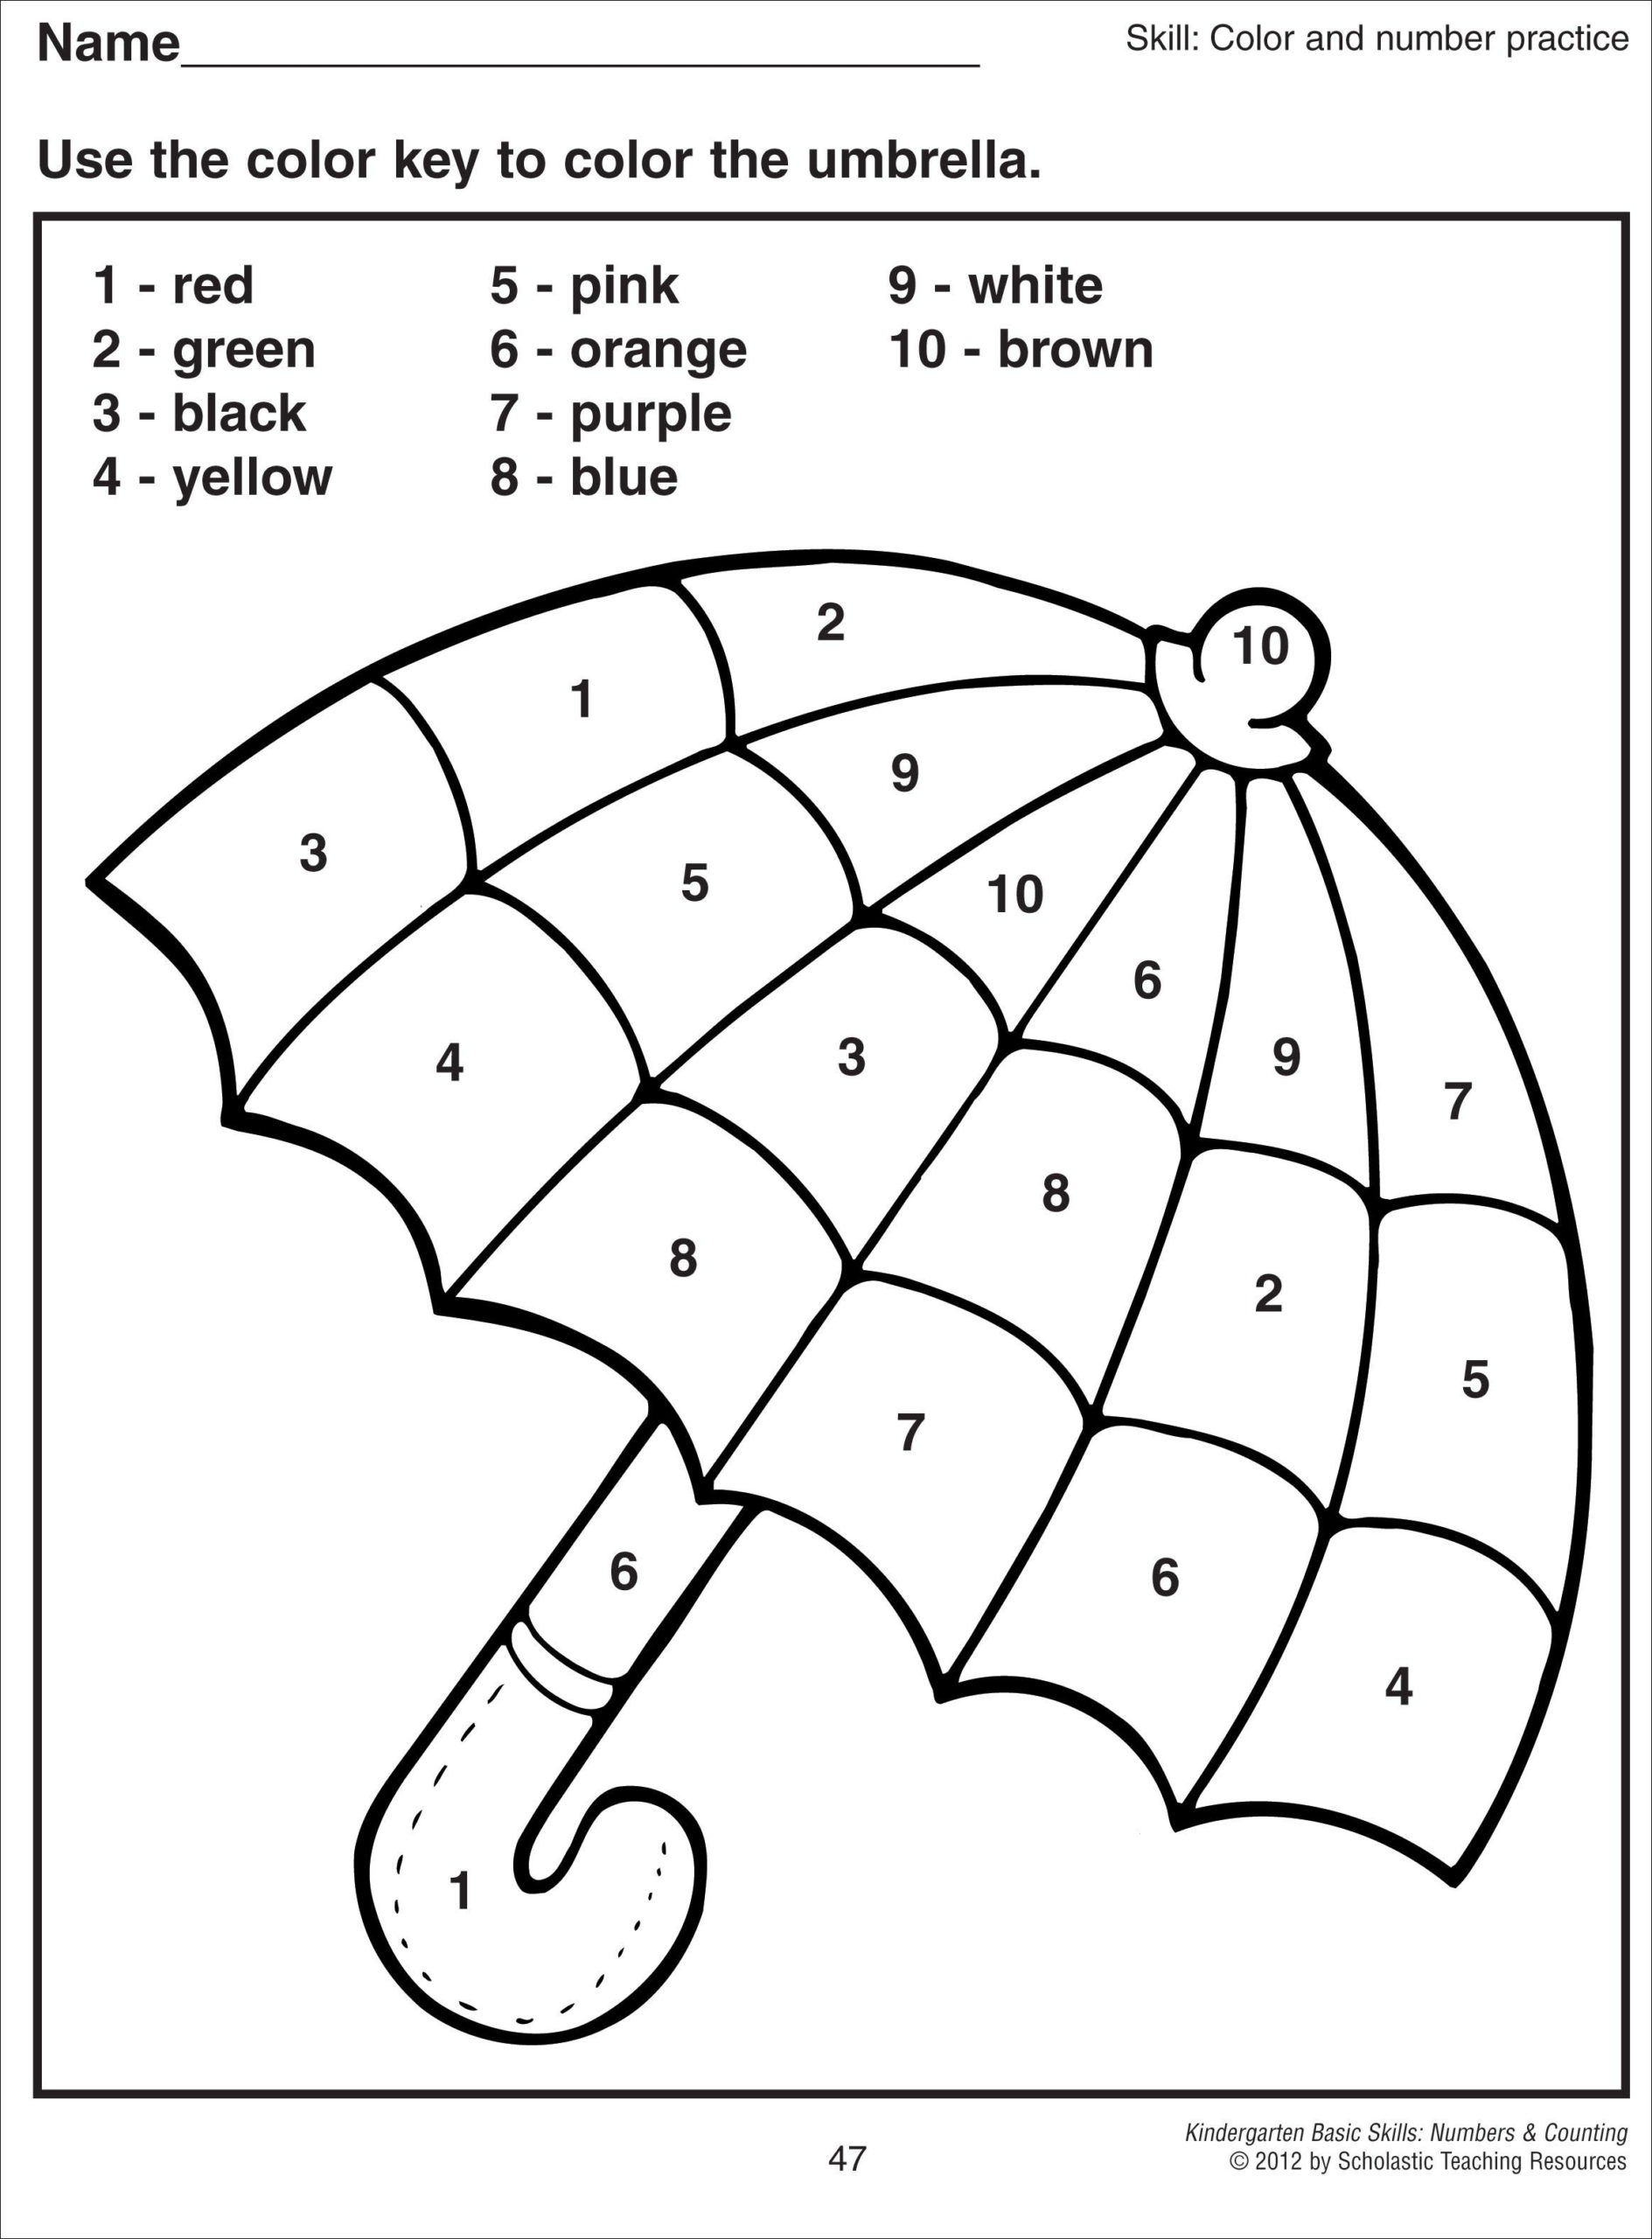 Colornumbers Umbrella | Kindergarten Coloring Pages